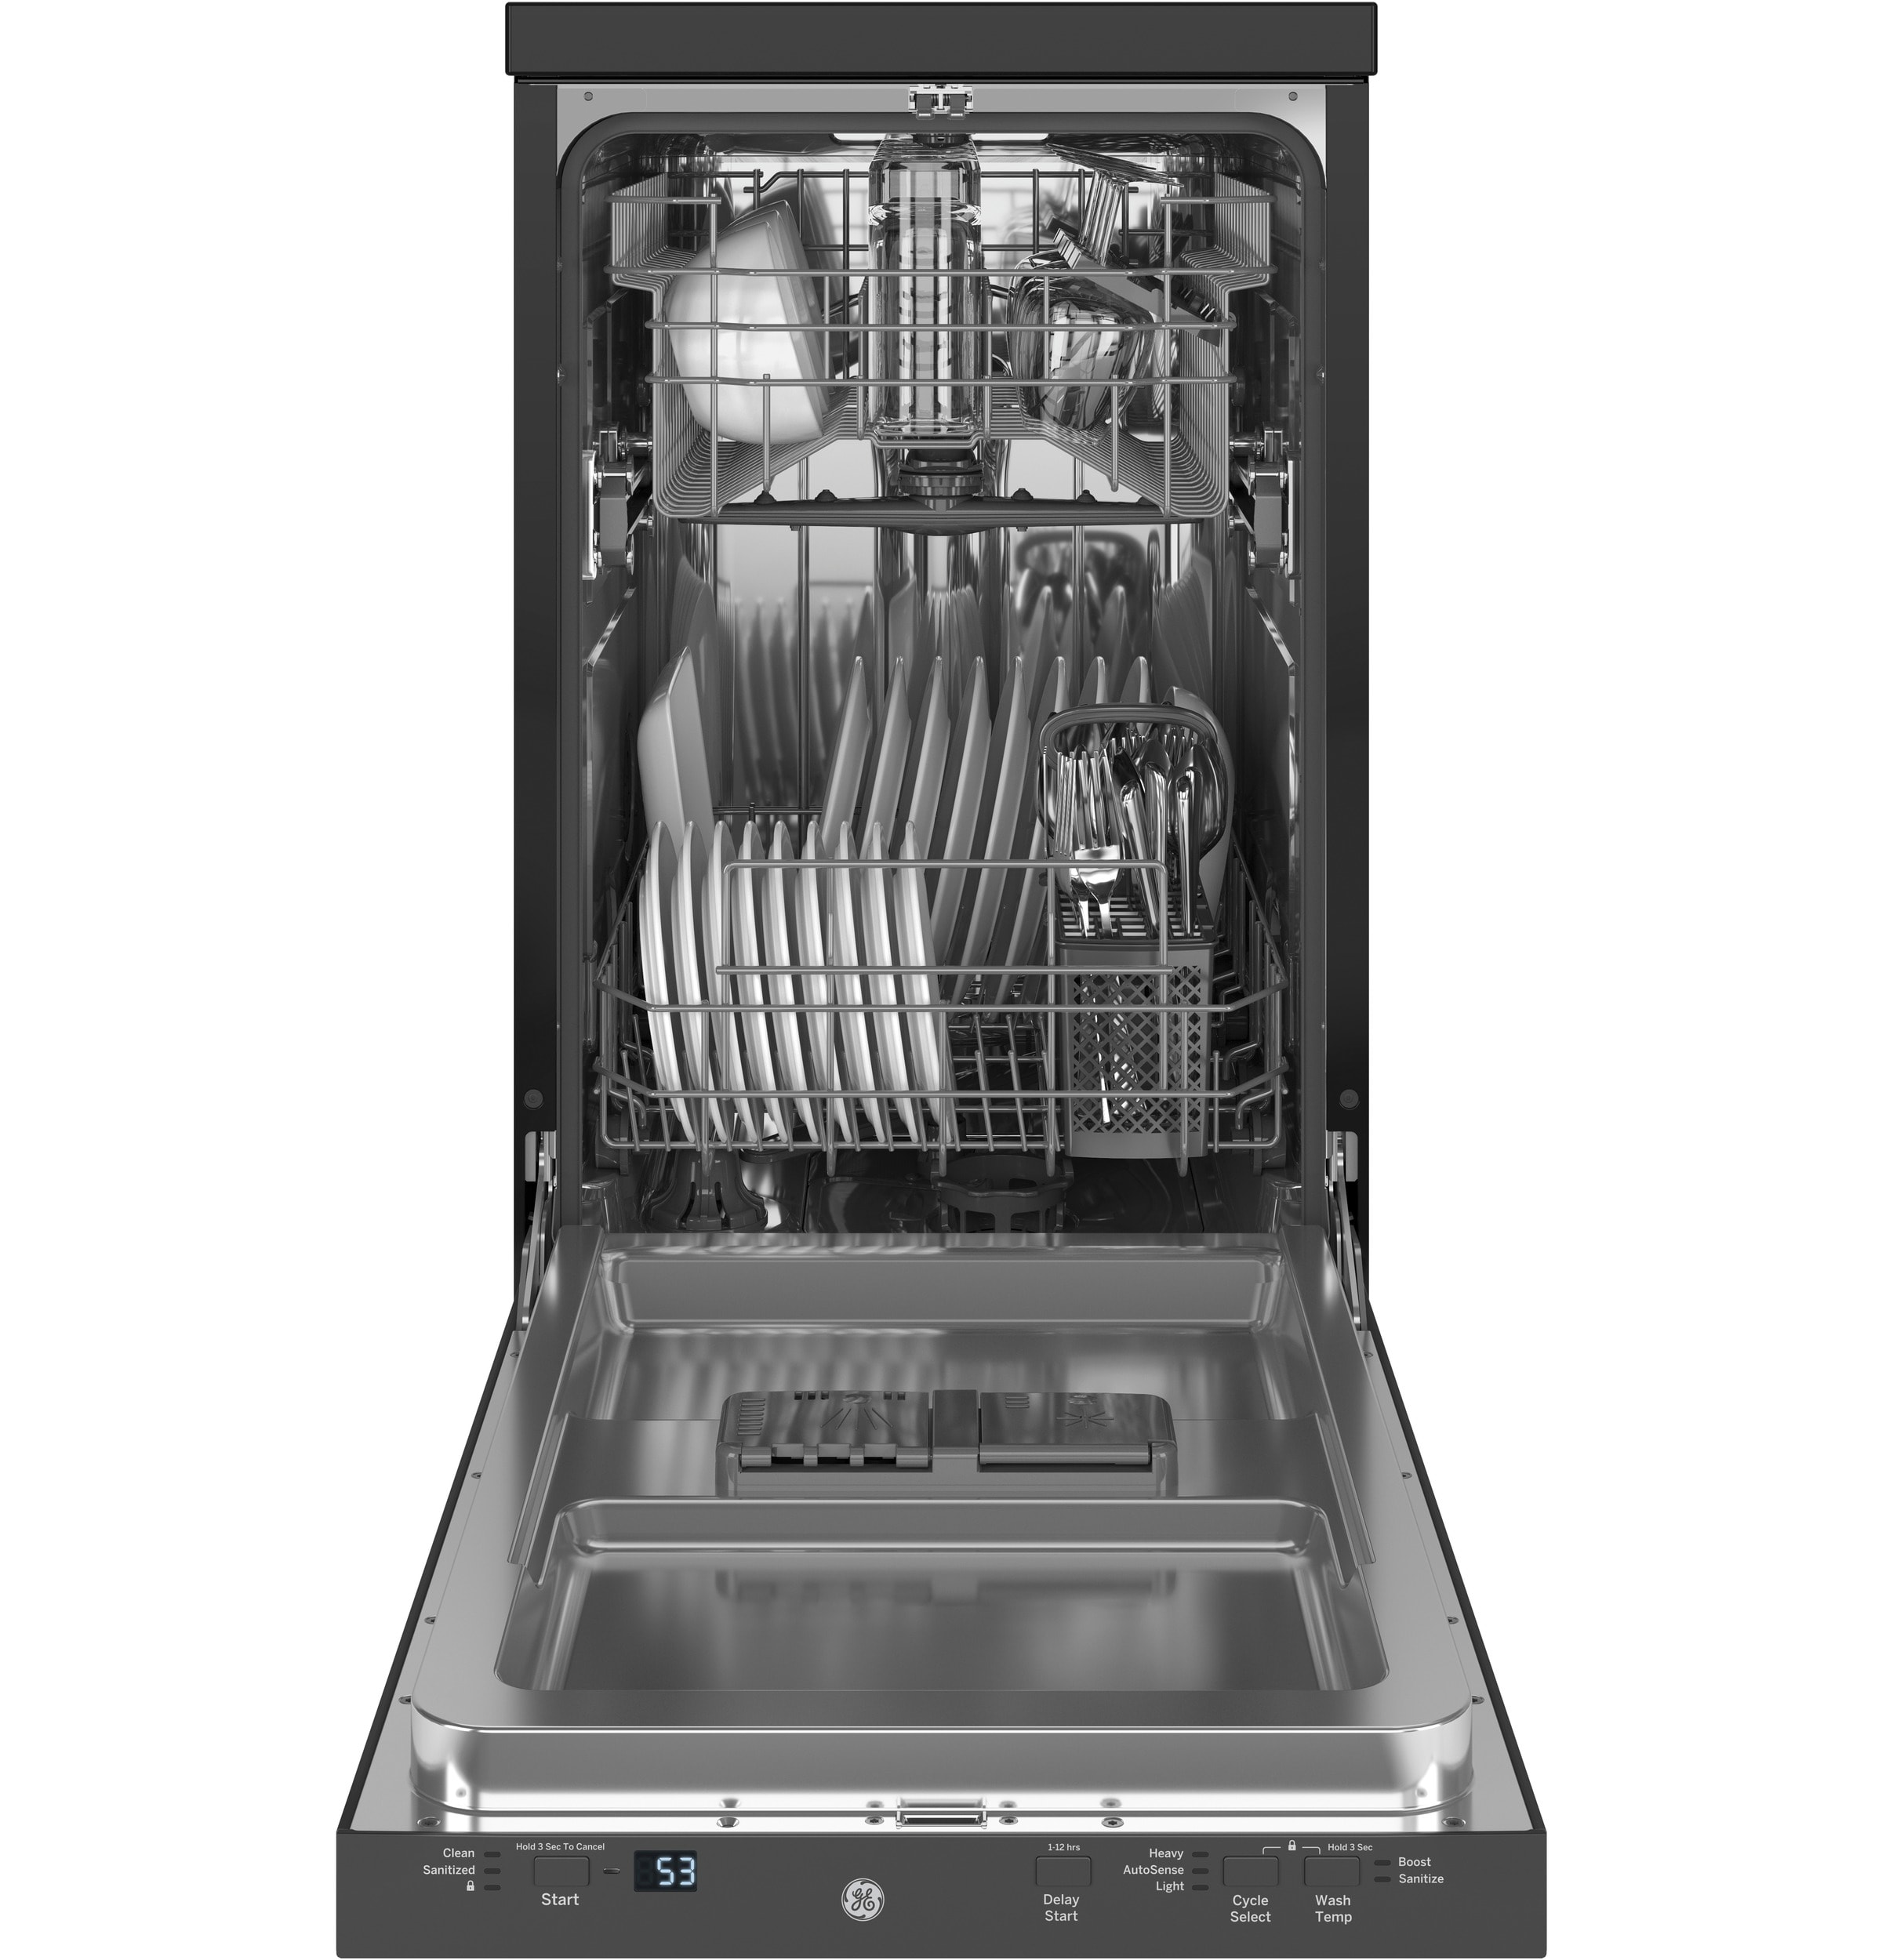 SPT SD-2224DSB Countertop Dishwasher, Silver